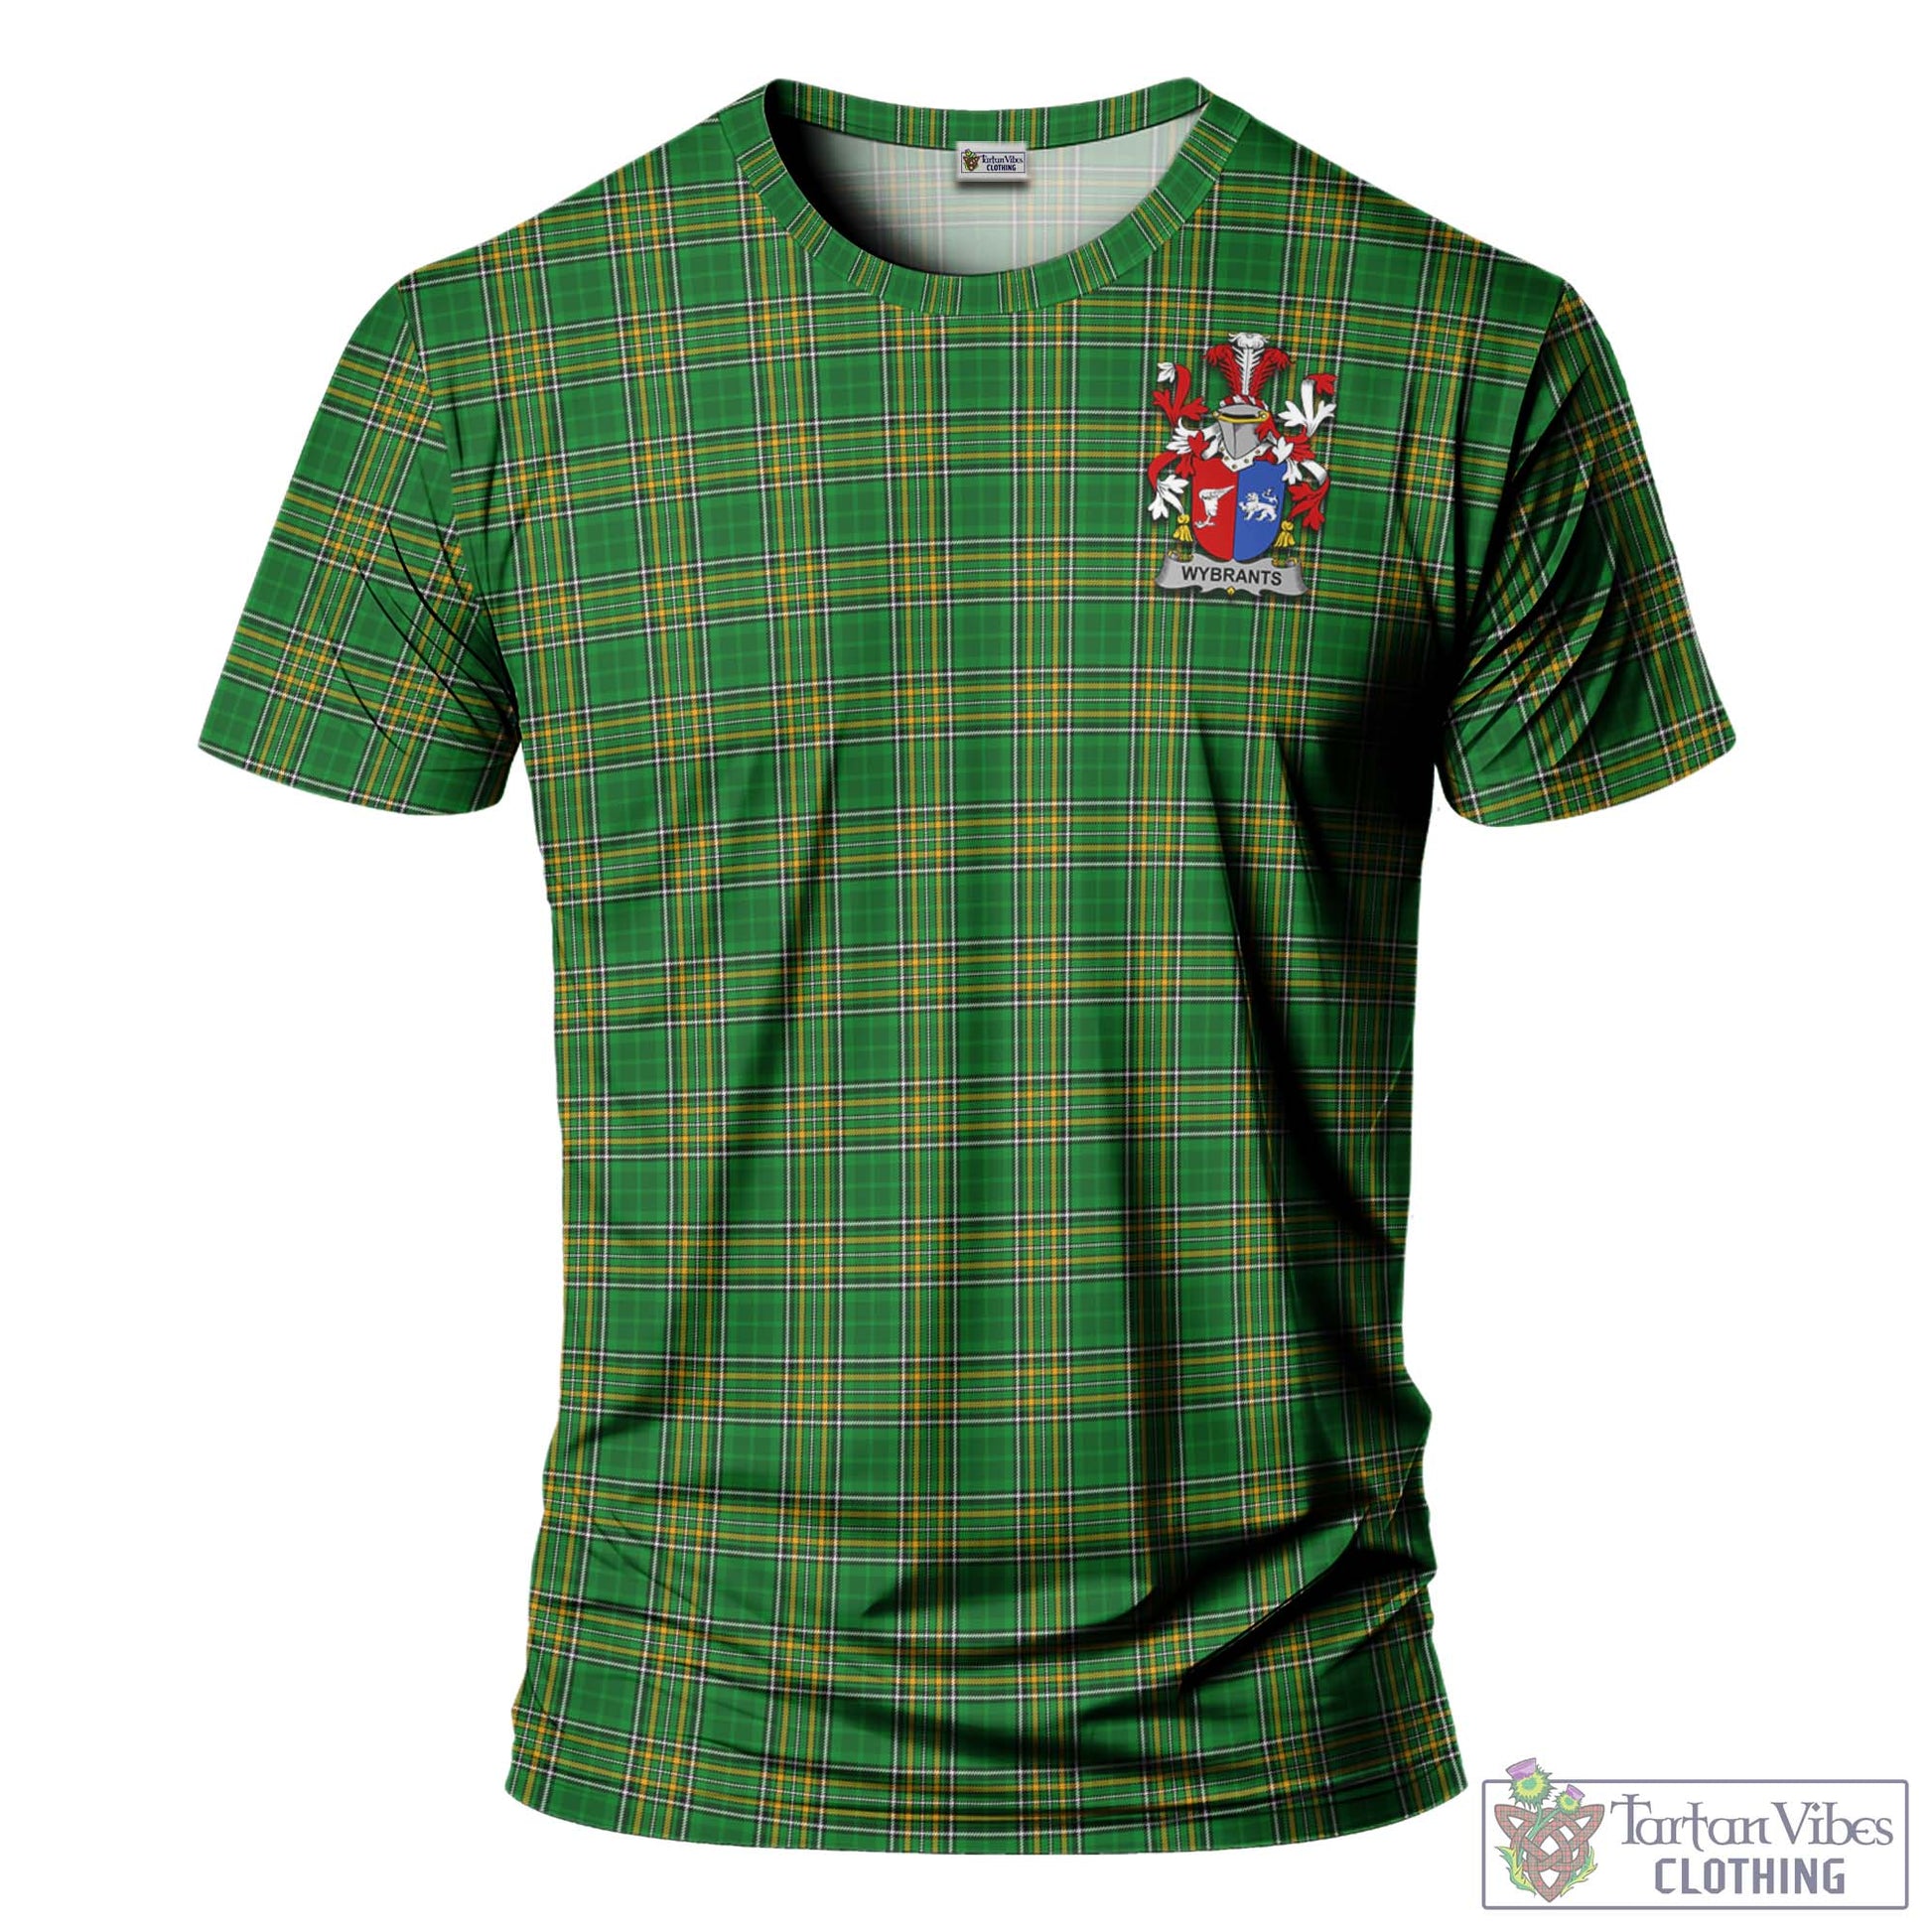 Tartan Vibes Clothing Wybrants Ireland Clan Tartan T-Shirt with Family Seal